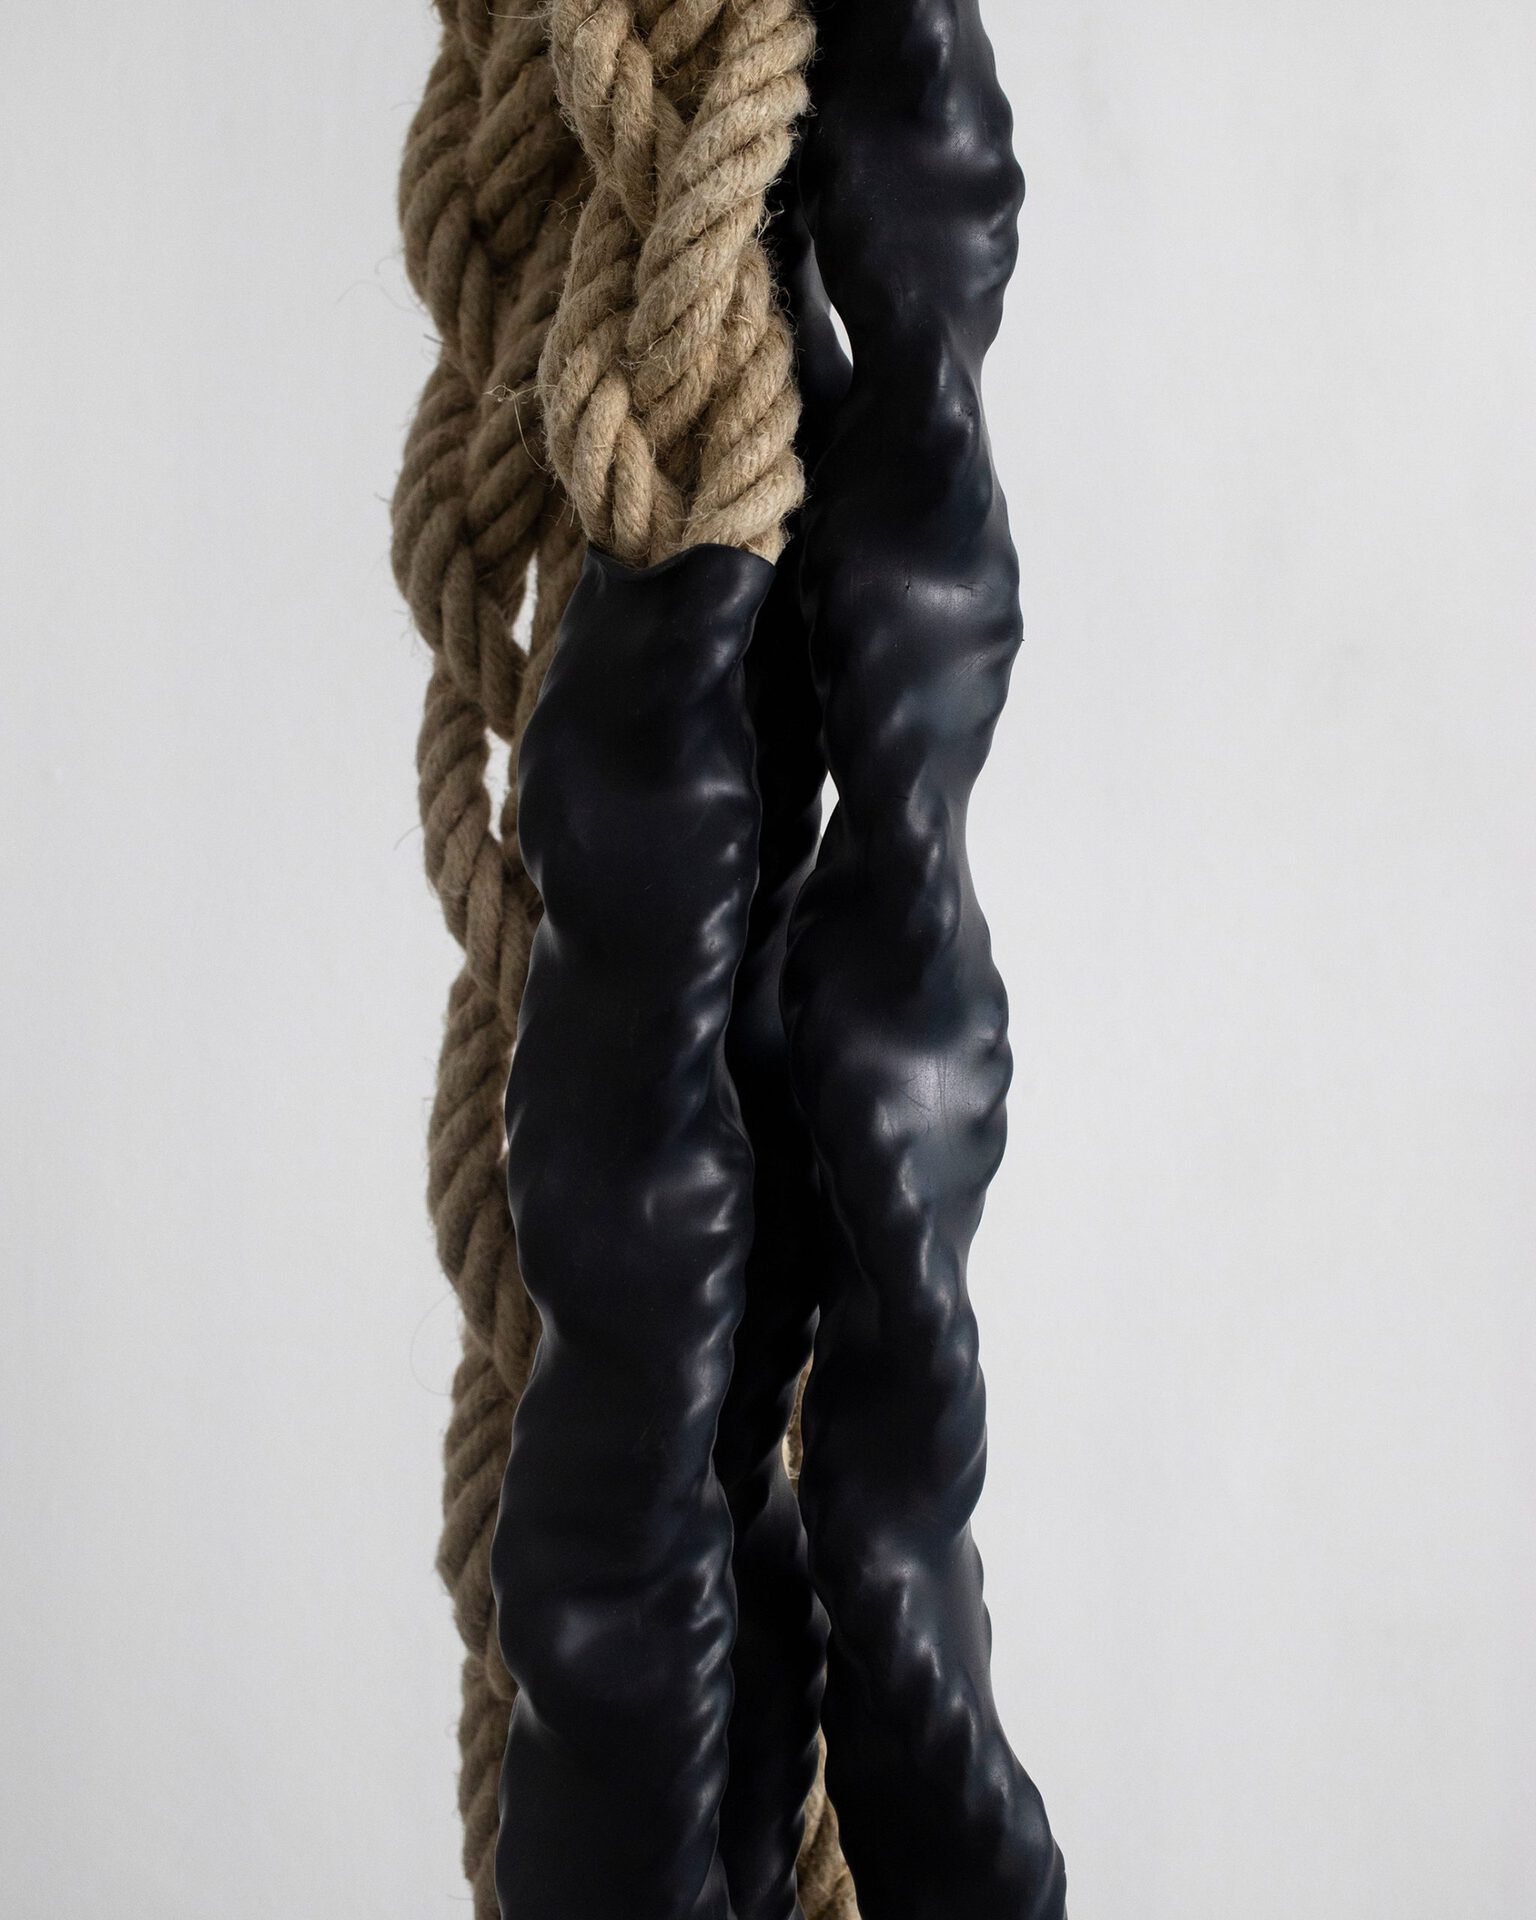 Una Szeemann, As we lay on fingers, 2021, Rope, shrinking tube, metal, 920 x 20 cm, variable (Detail)